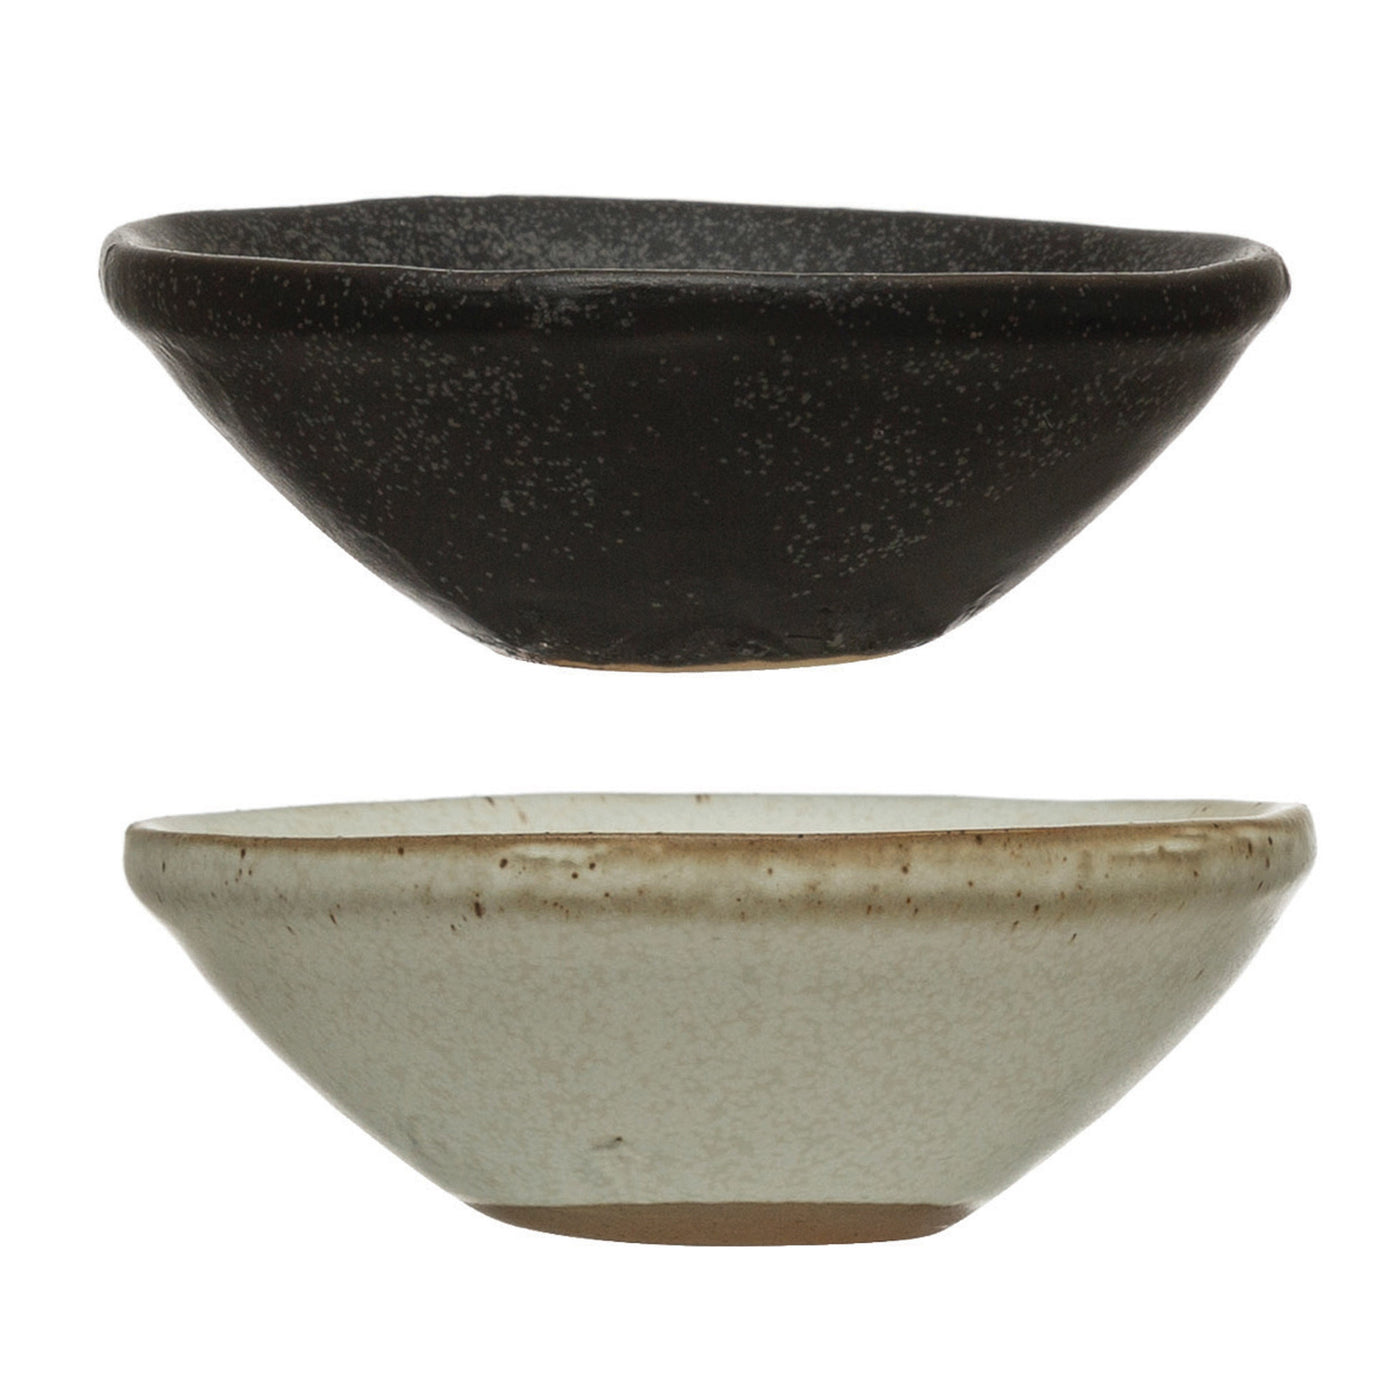 Notions Stoneware Bowl - Danshire Market and Design 